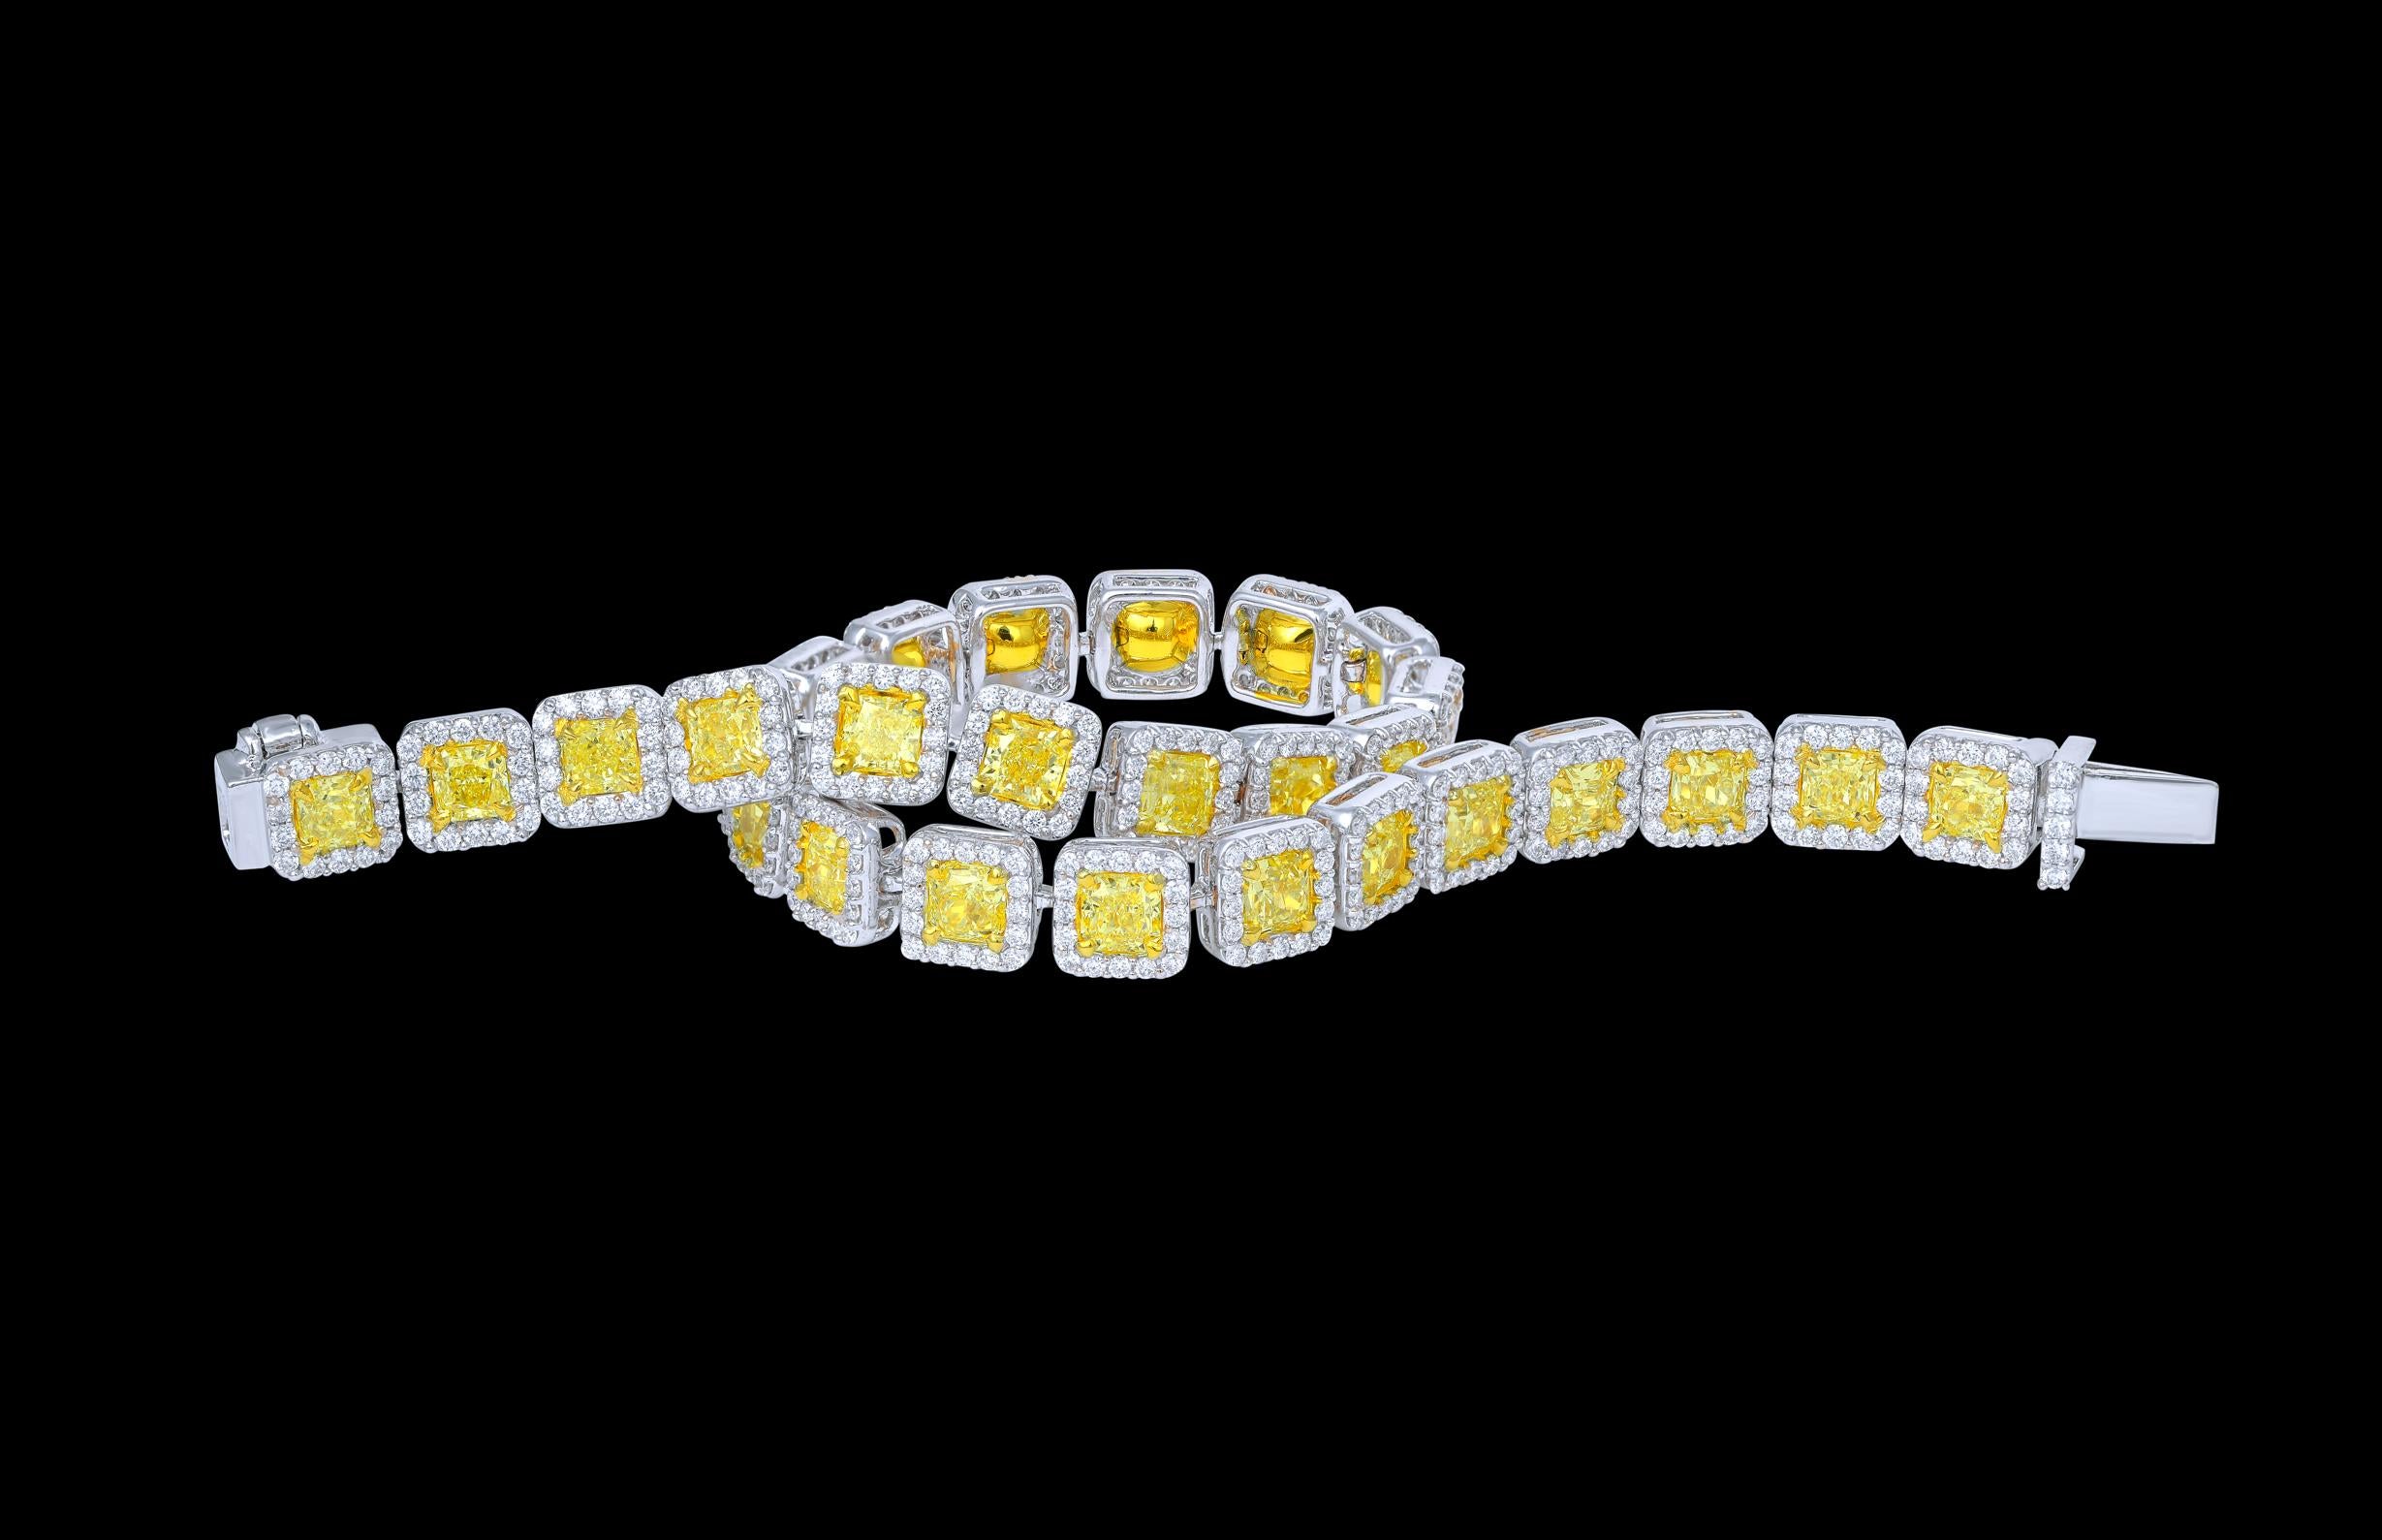 Radiant Cut Contemporary Tennis Yellow Diamond Bracelet with White Halo, 7.58 Carat